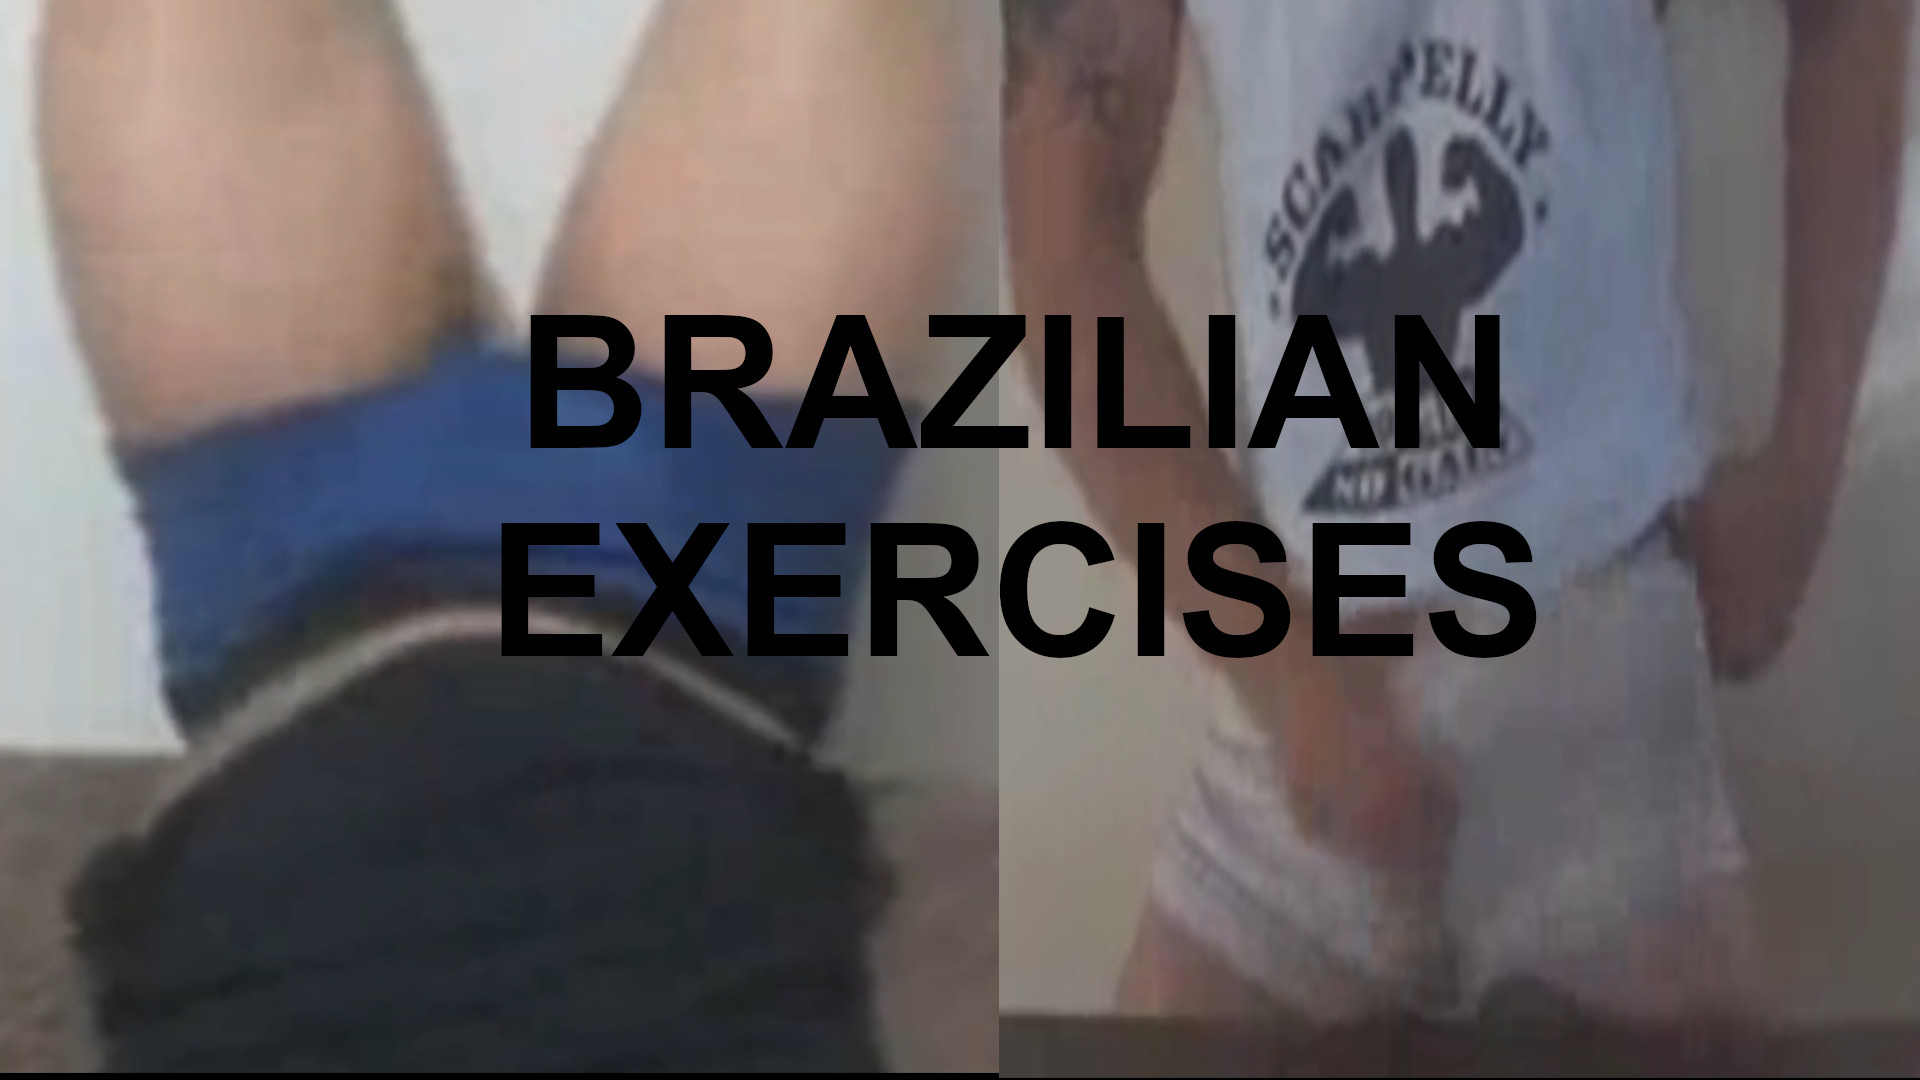 BRAZILIAN EXERCISES